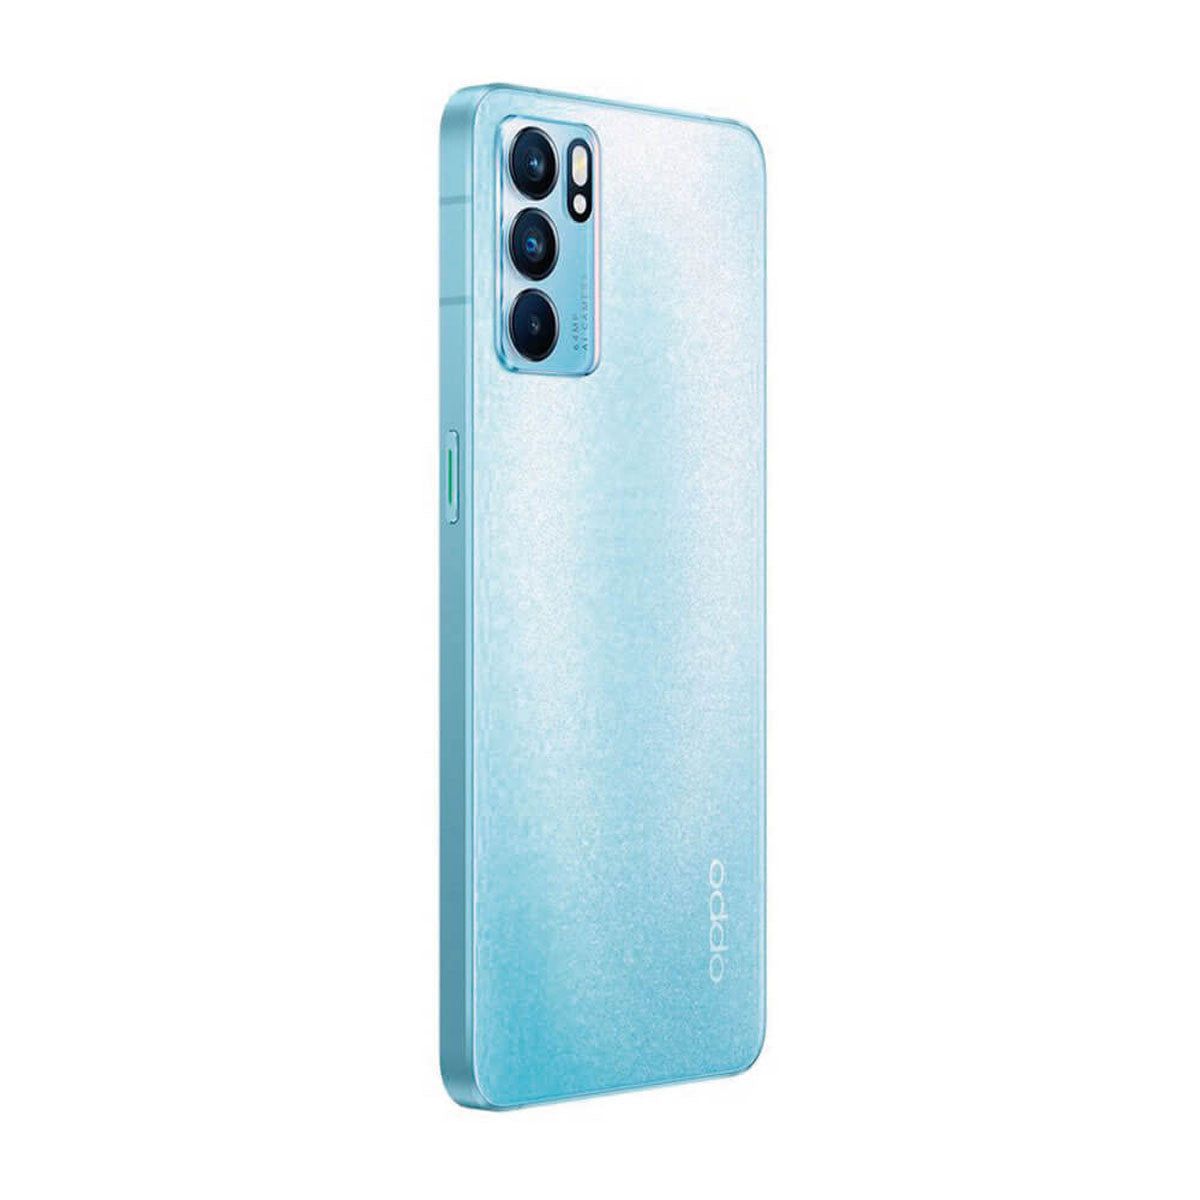 Oppo Reno6 5G 8GB/128GB Azul (Arctic Blue) Dual SIM CPH2251 Smartphone | Oppo